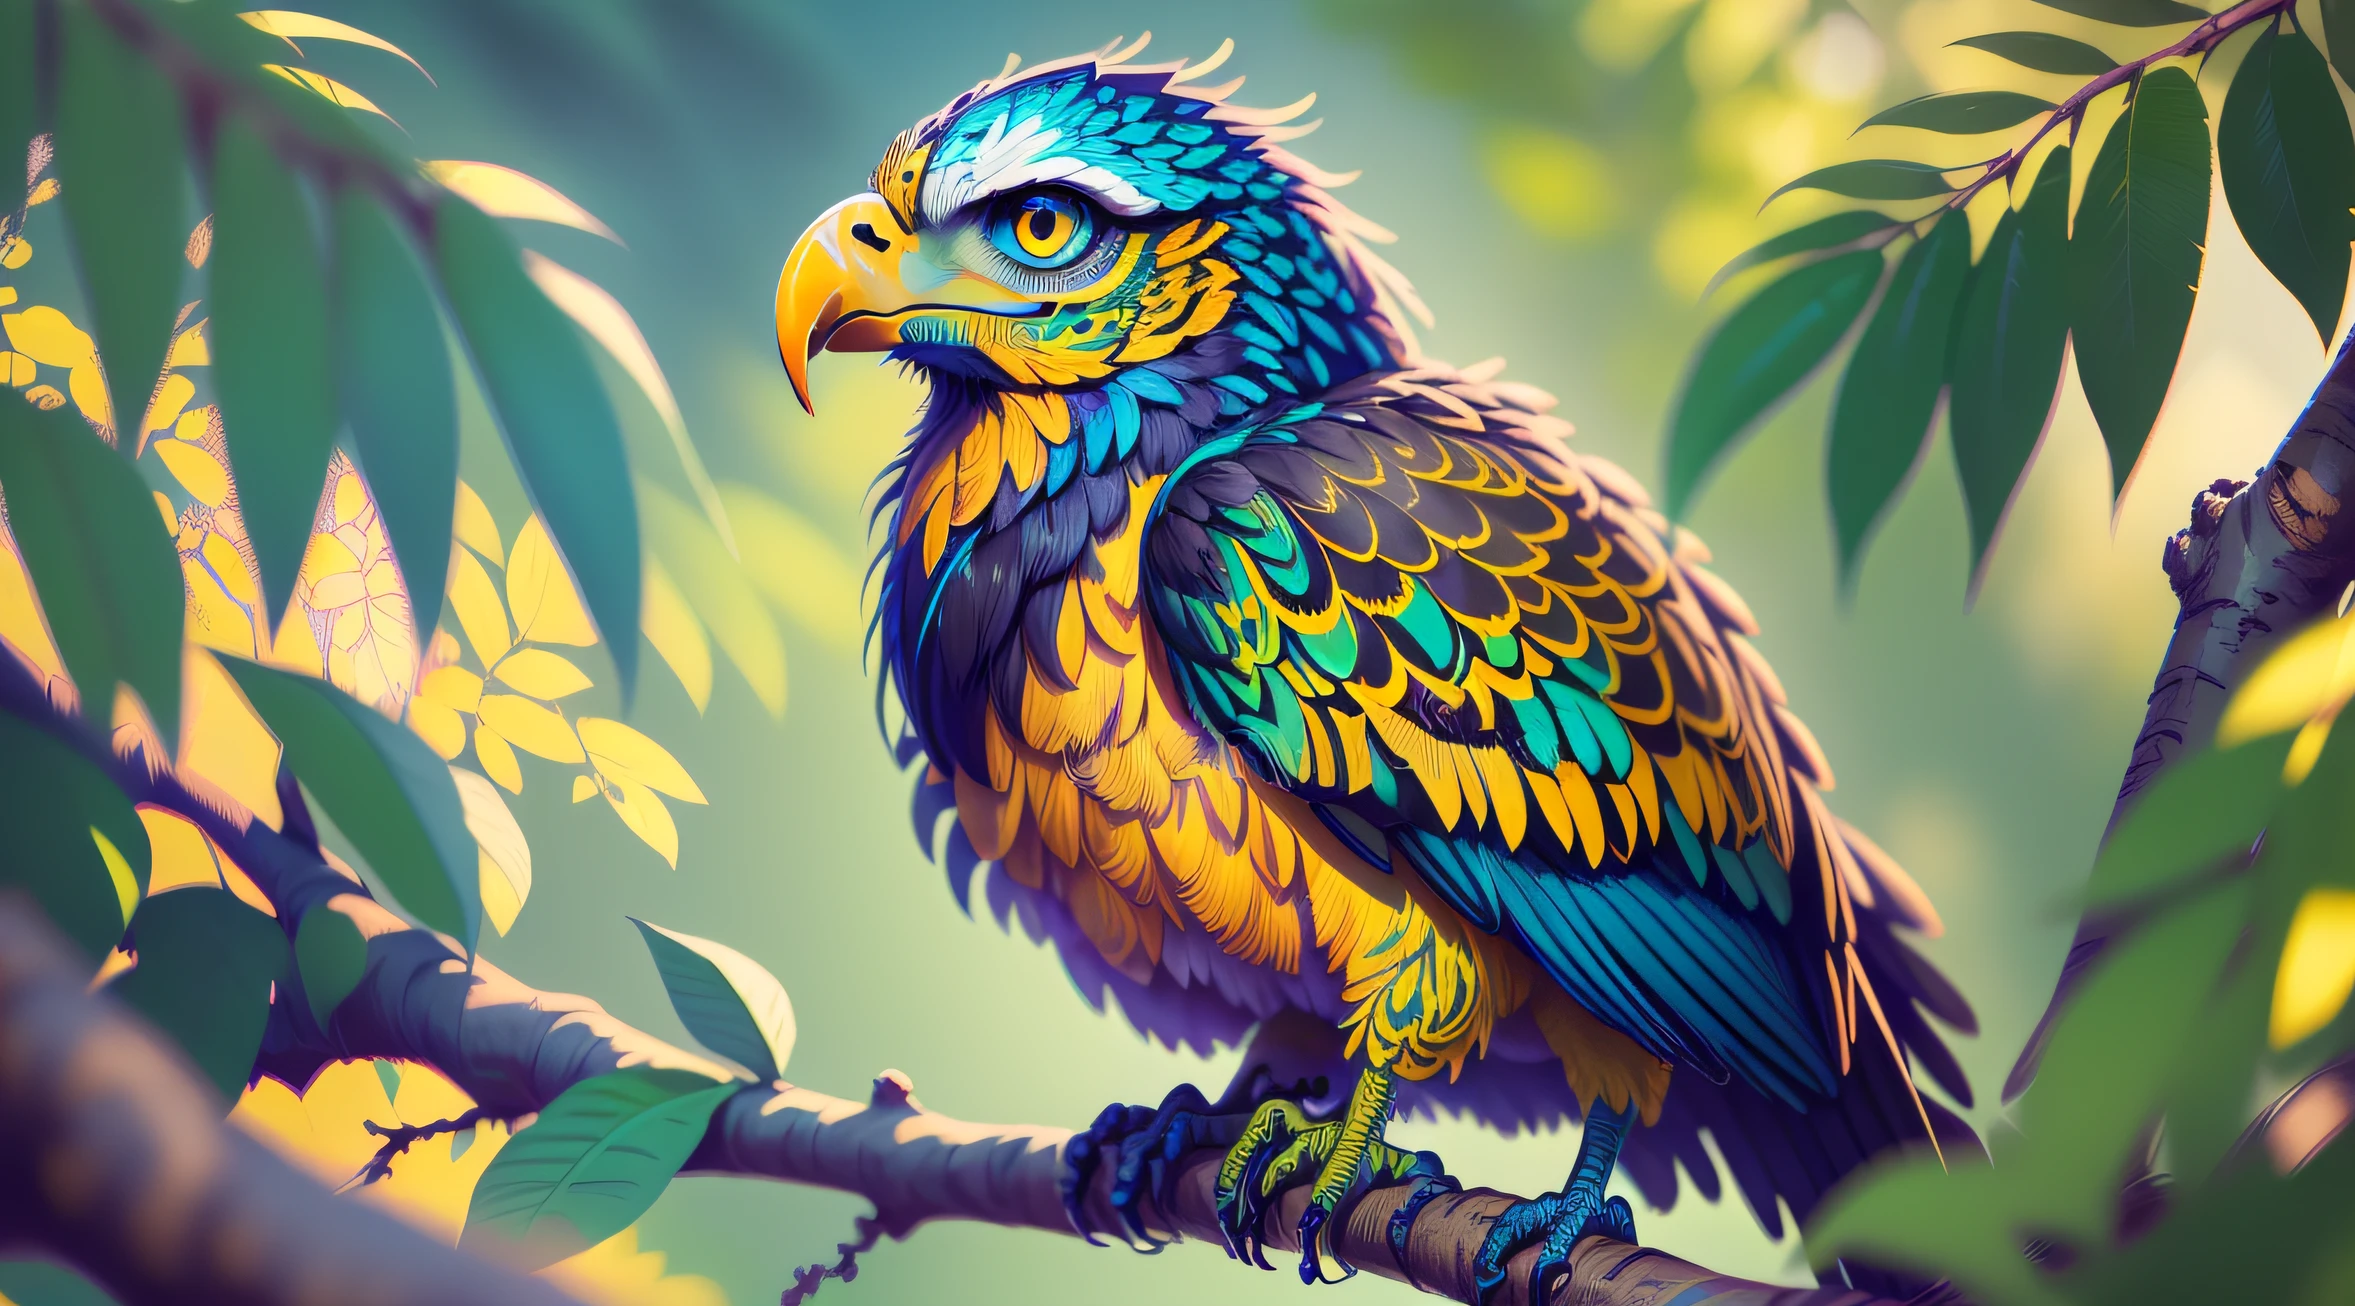 Green and blue feathered eagle mixed with yellow, with strong colors of medium contrast, on top of a tree branch, com bico afiado, ((com olhos vermelhos)), (Realistic illustration with intricate details:1.5). Em um ambiente selvagem da natureza., ((Foto RAW, 8k UHD, qualidade superior:1.4))